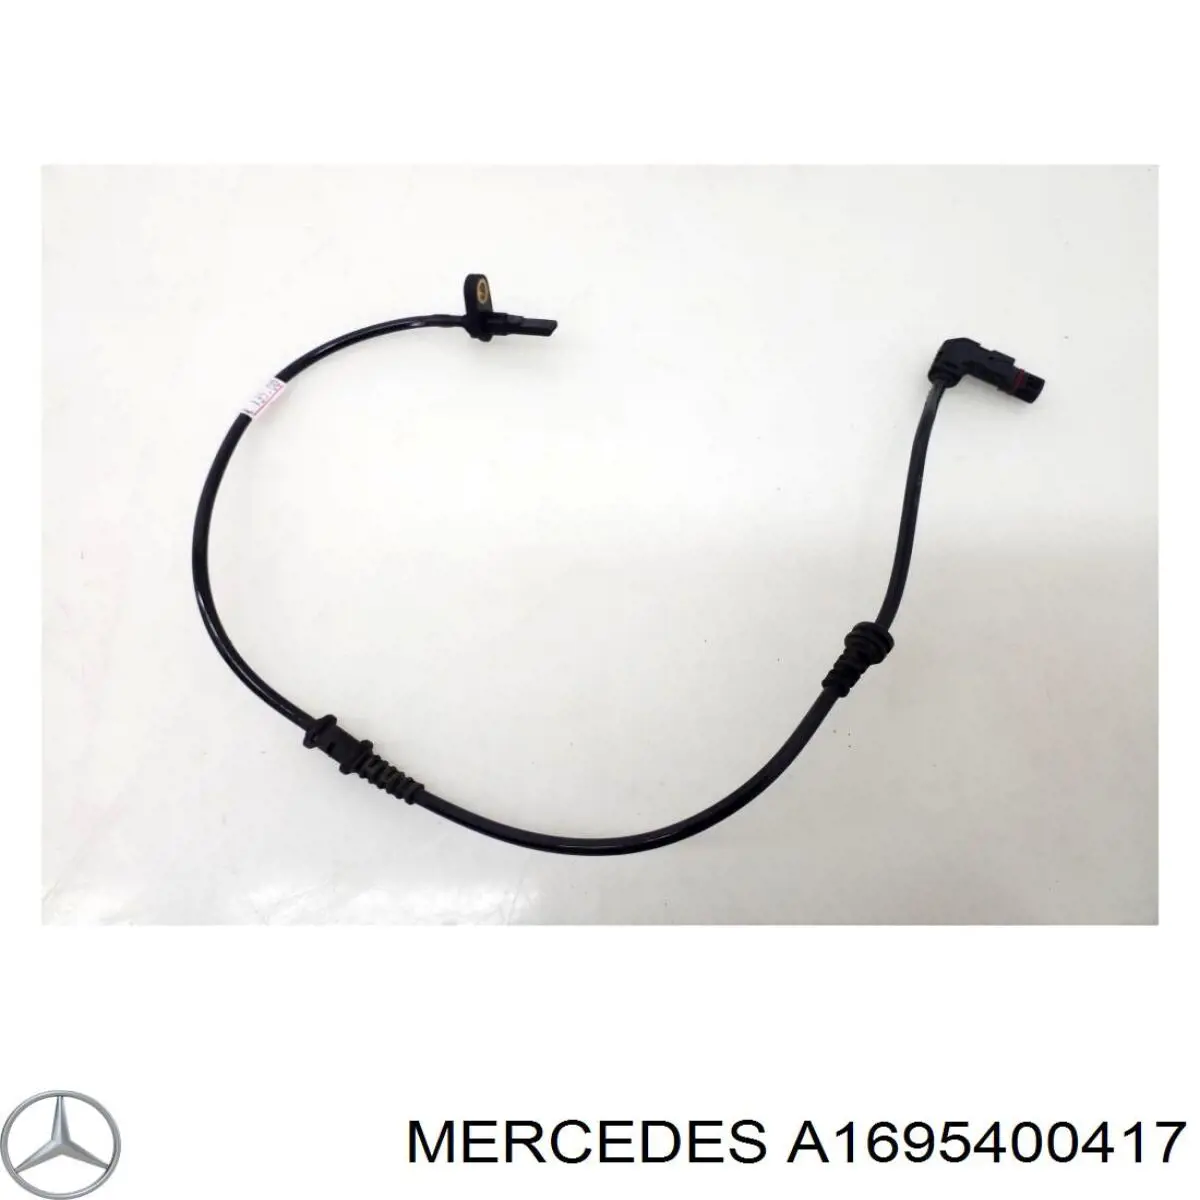 A1695400417 Mercedes датчик абс (abs передний)